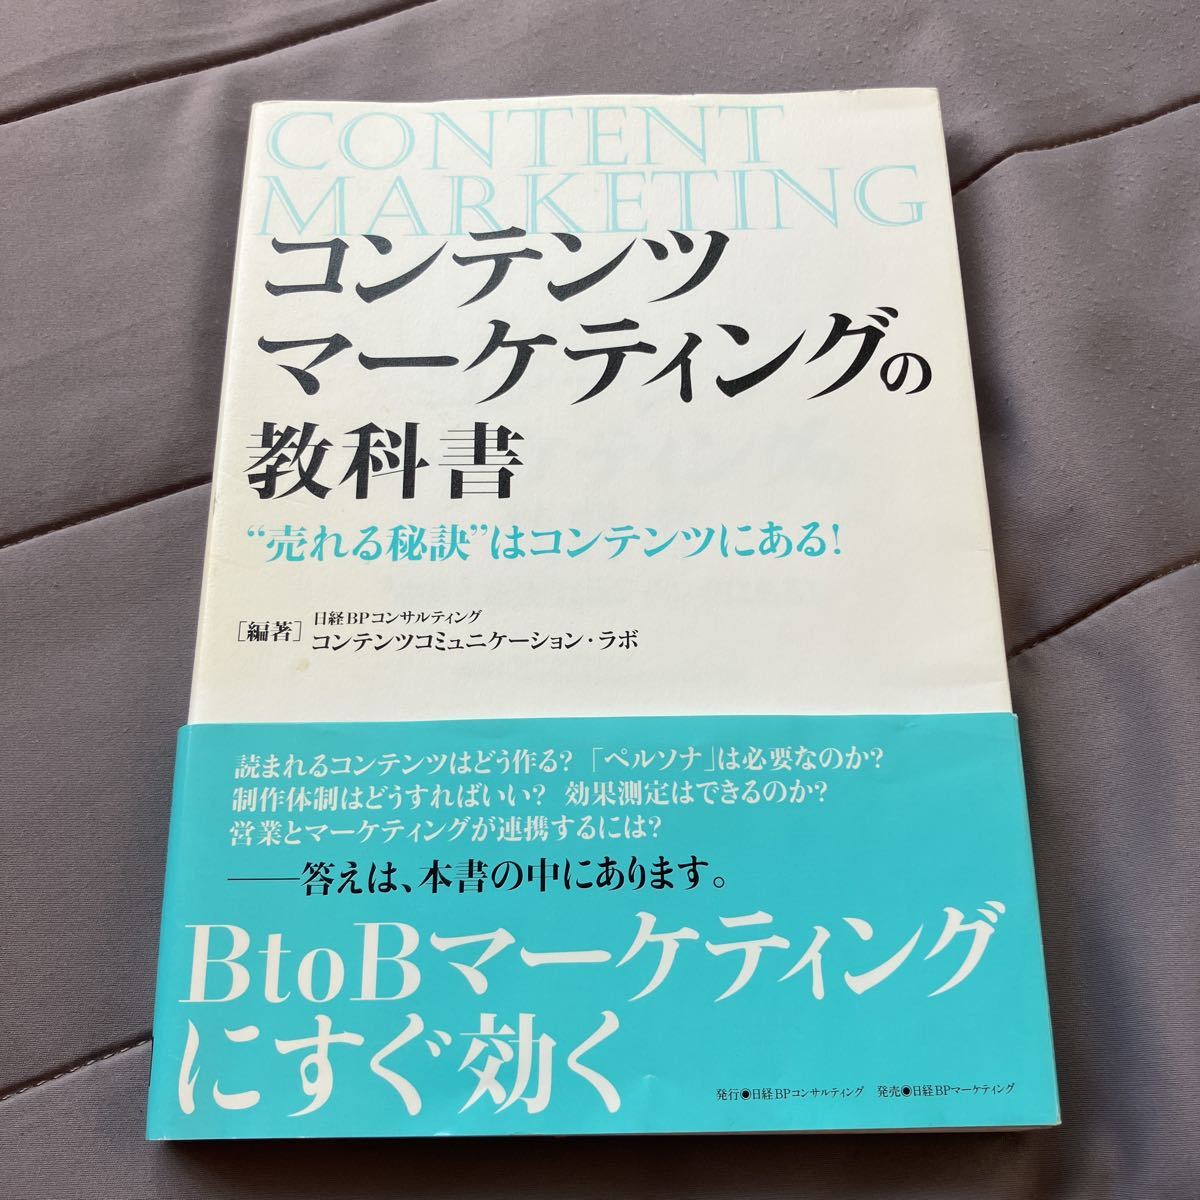  содержание маркетинг. учебник Nikkei BP темно синий обезьяна ting маркетинг книга